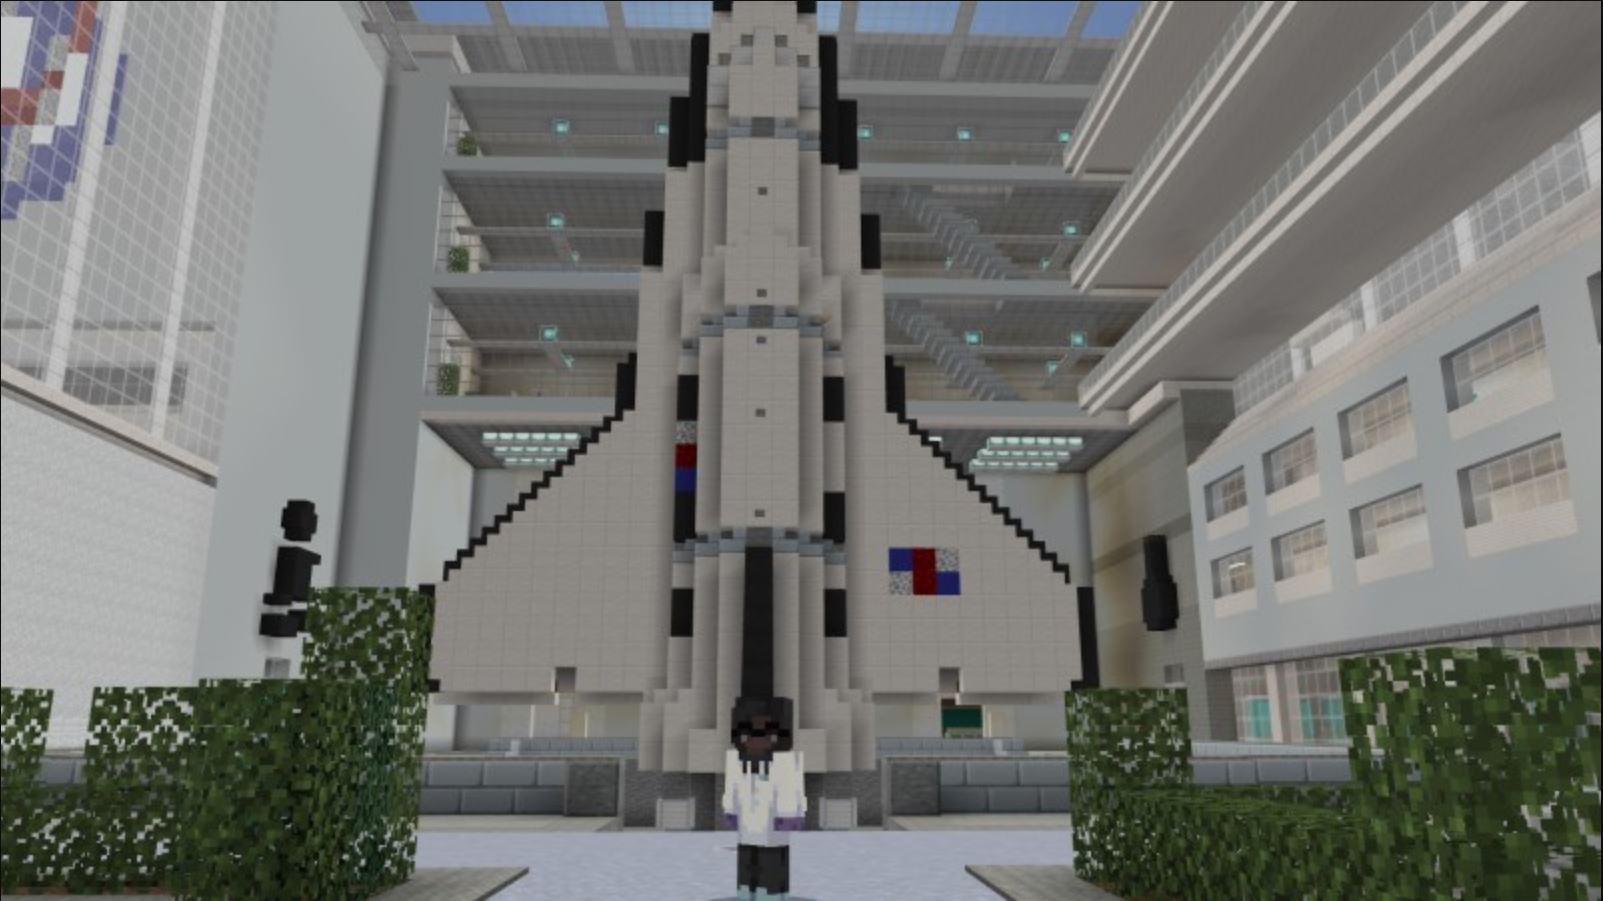 Minecraft Marketplace Explored: Astronaut Training Center, Train To Go To The Rocky Moon!